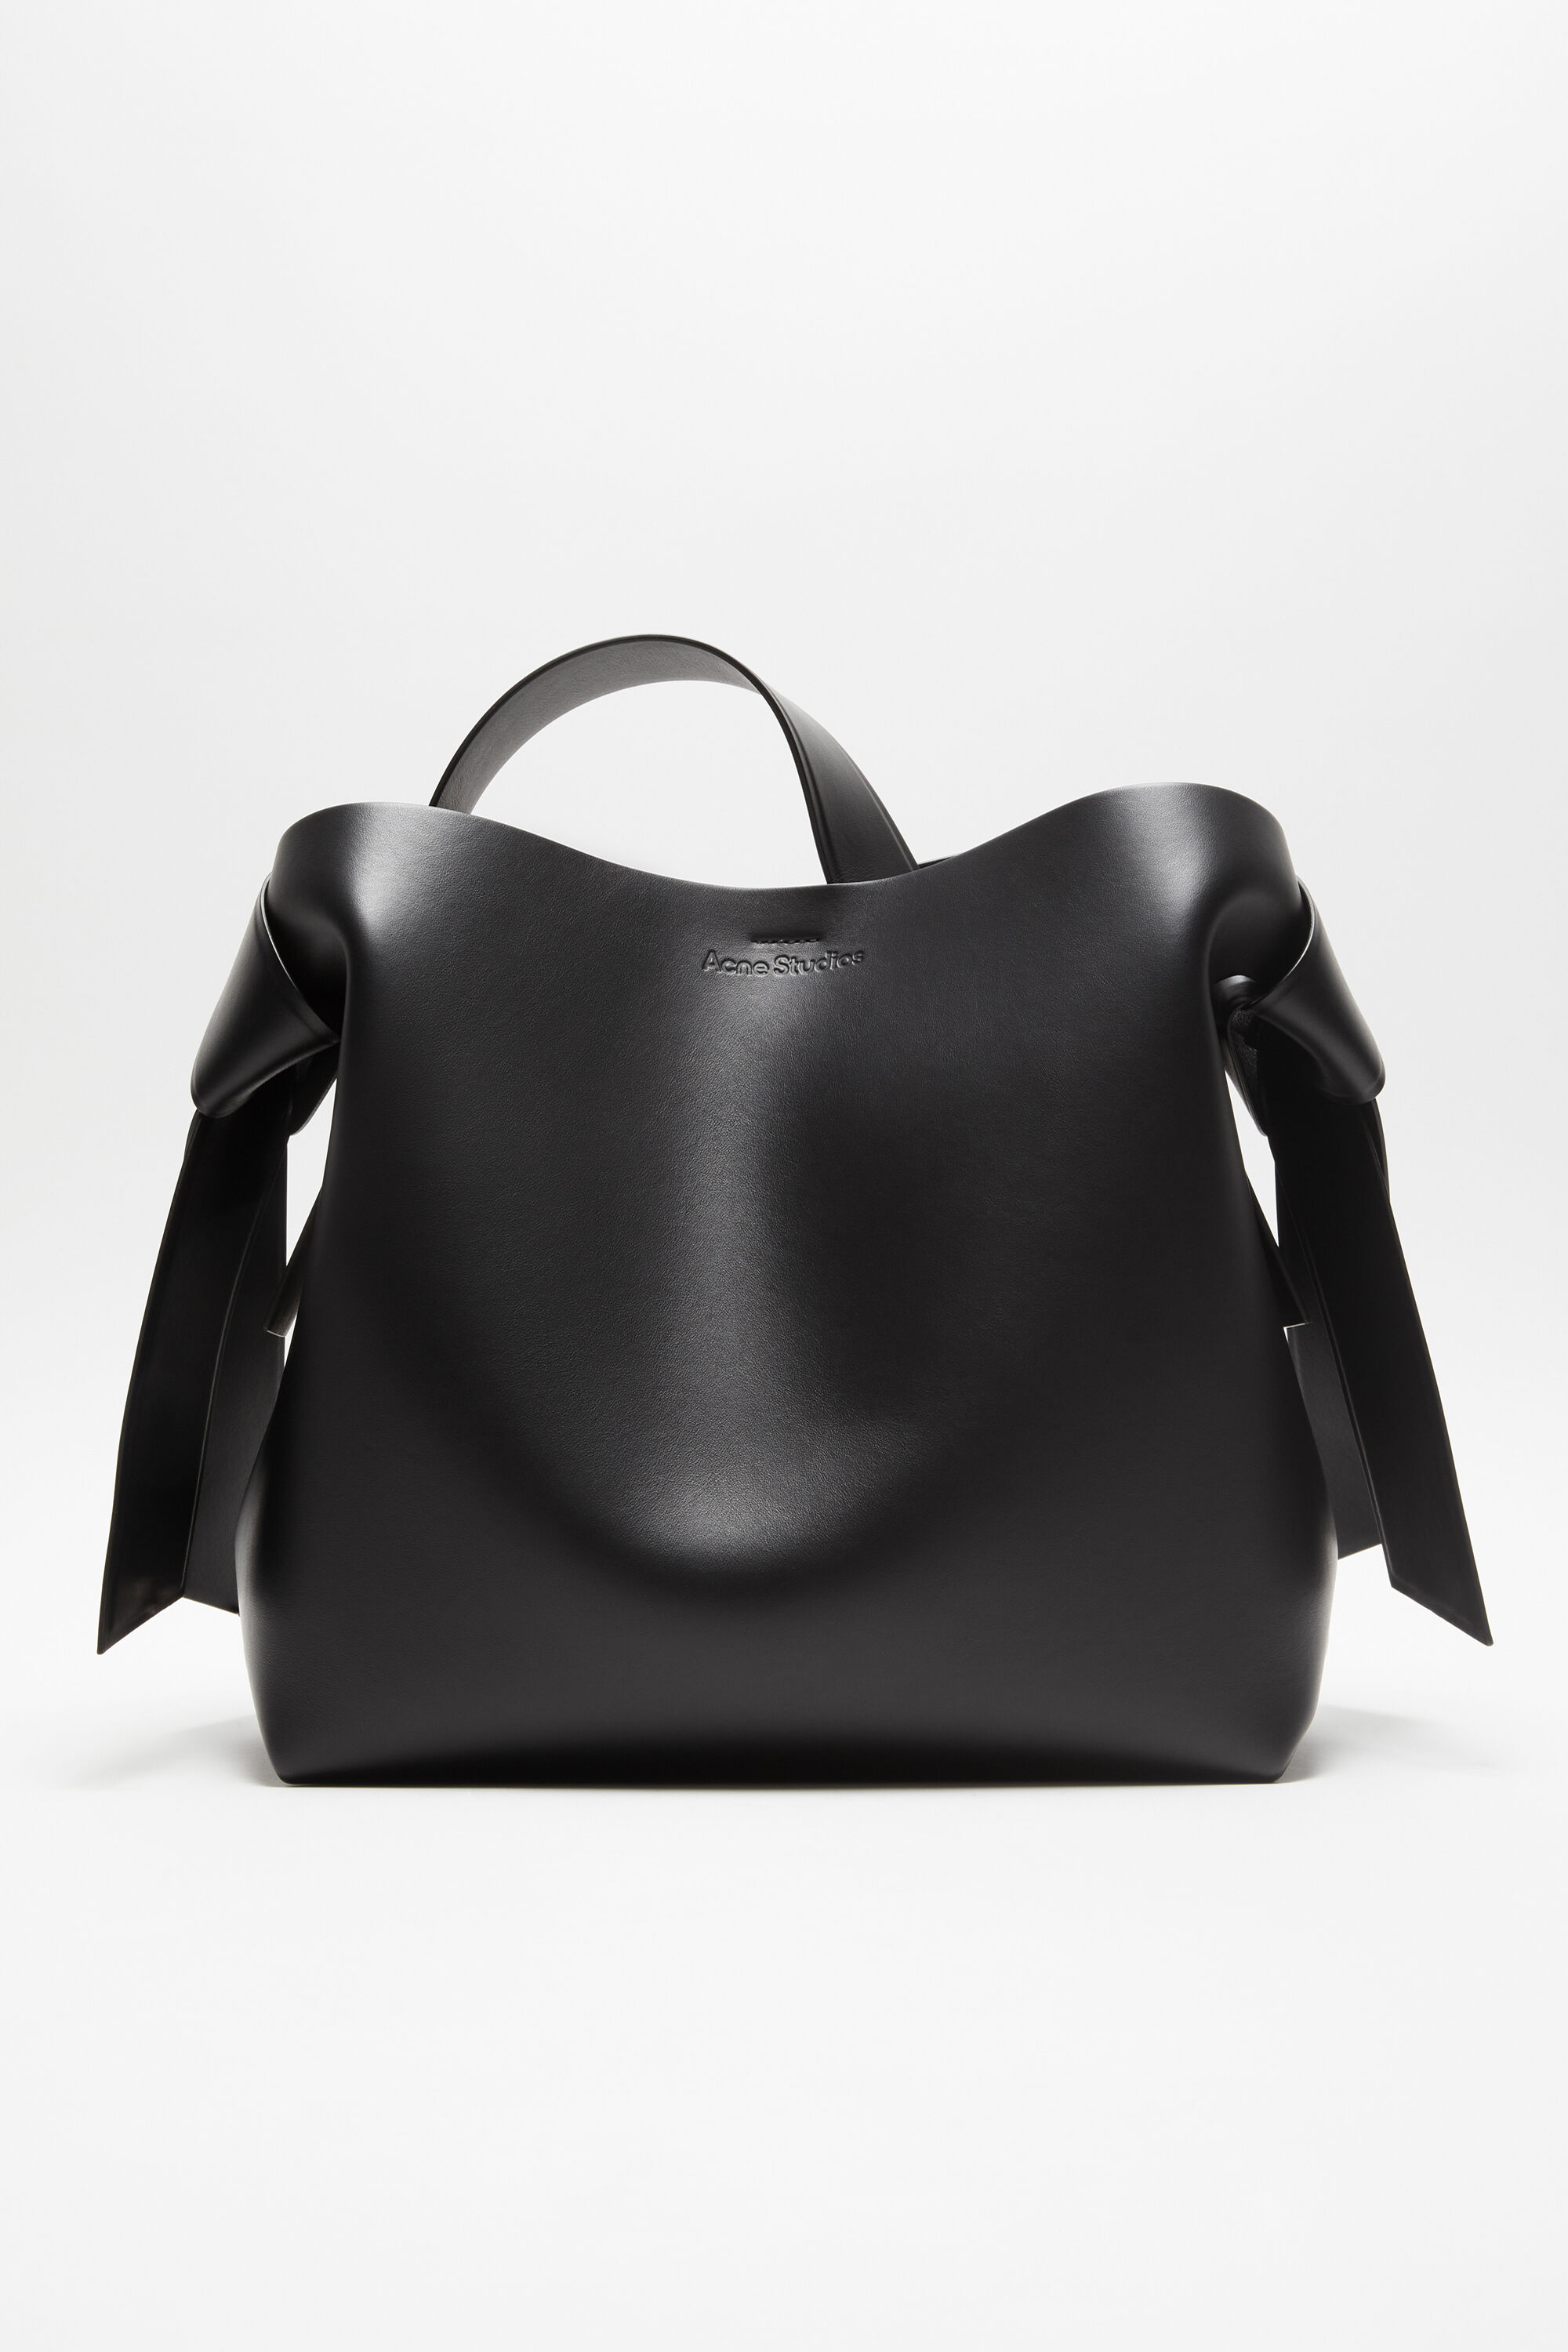 Acne Studios High Shine Tote Bag Black in Calfskin Leather - US